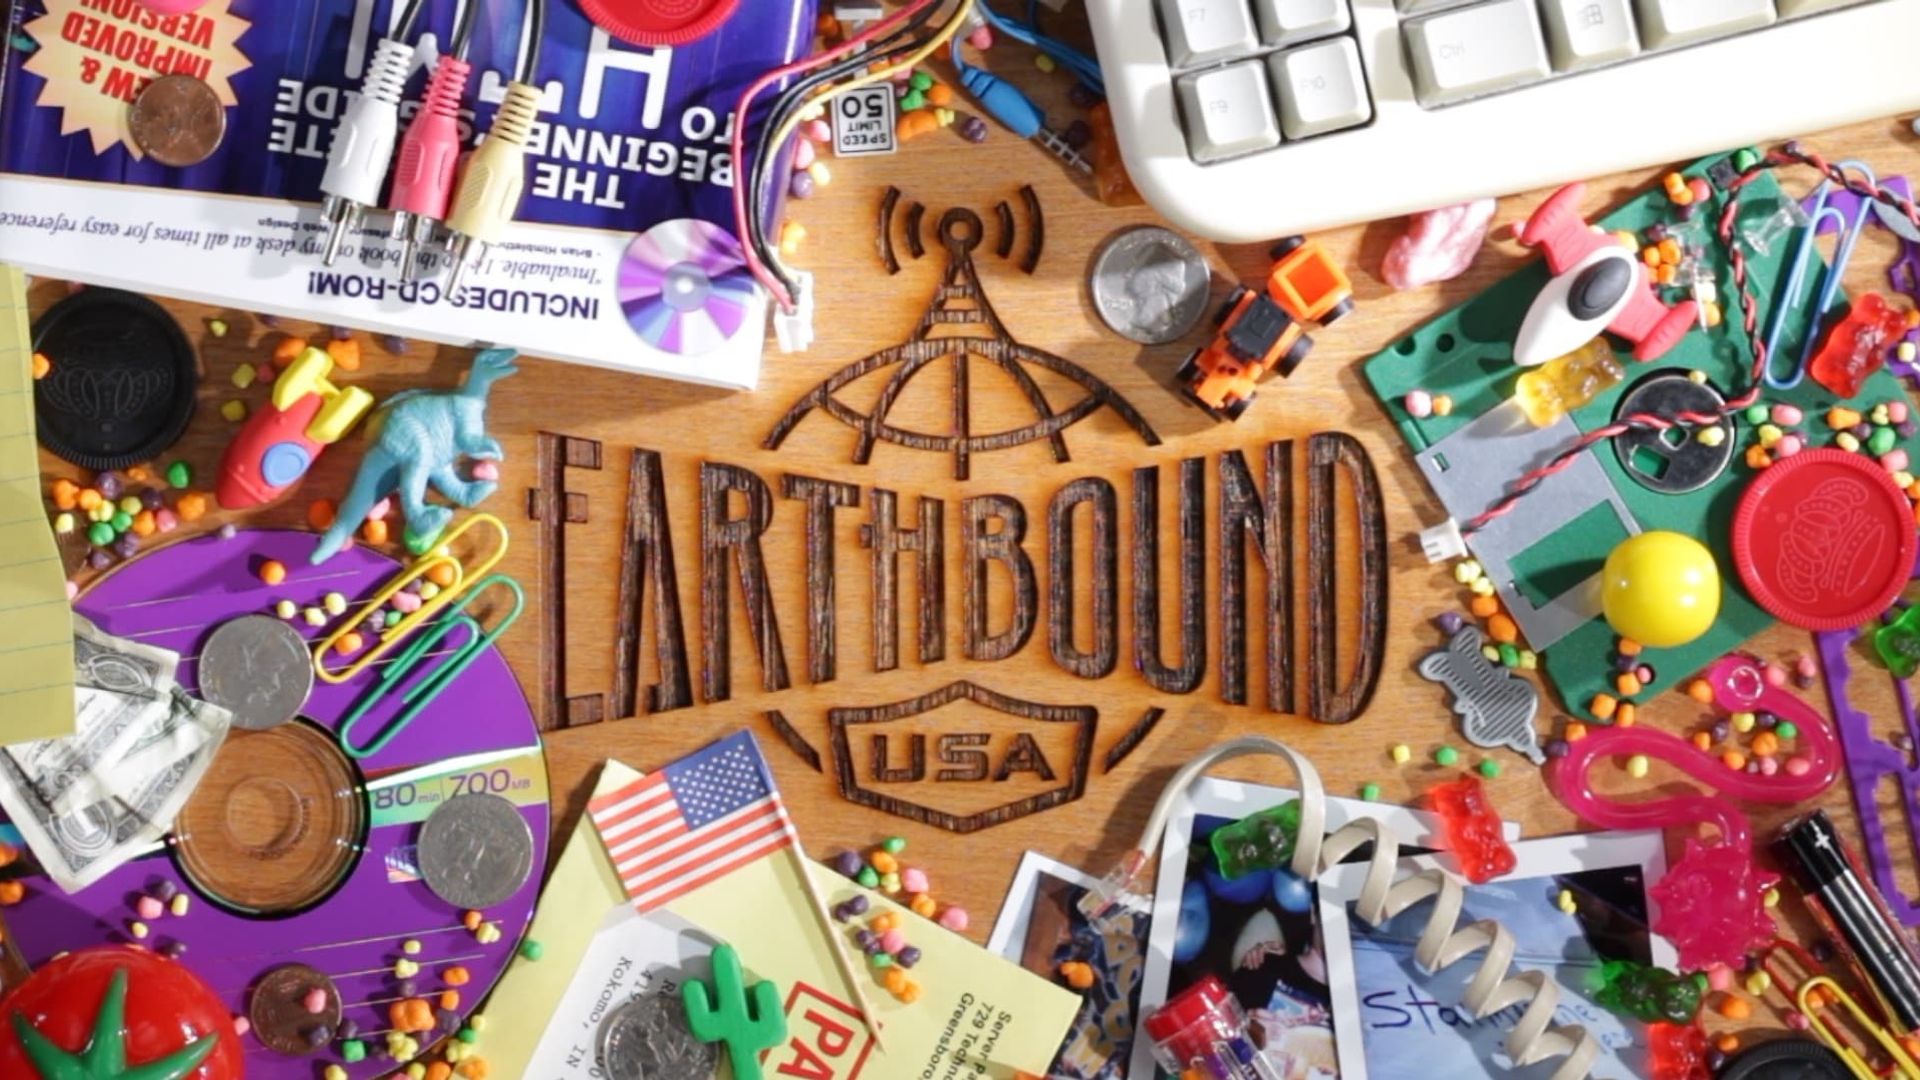 EarthBound, USA background